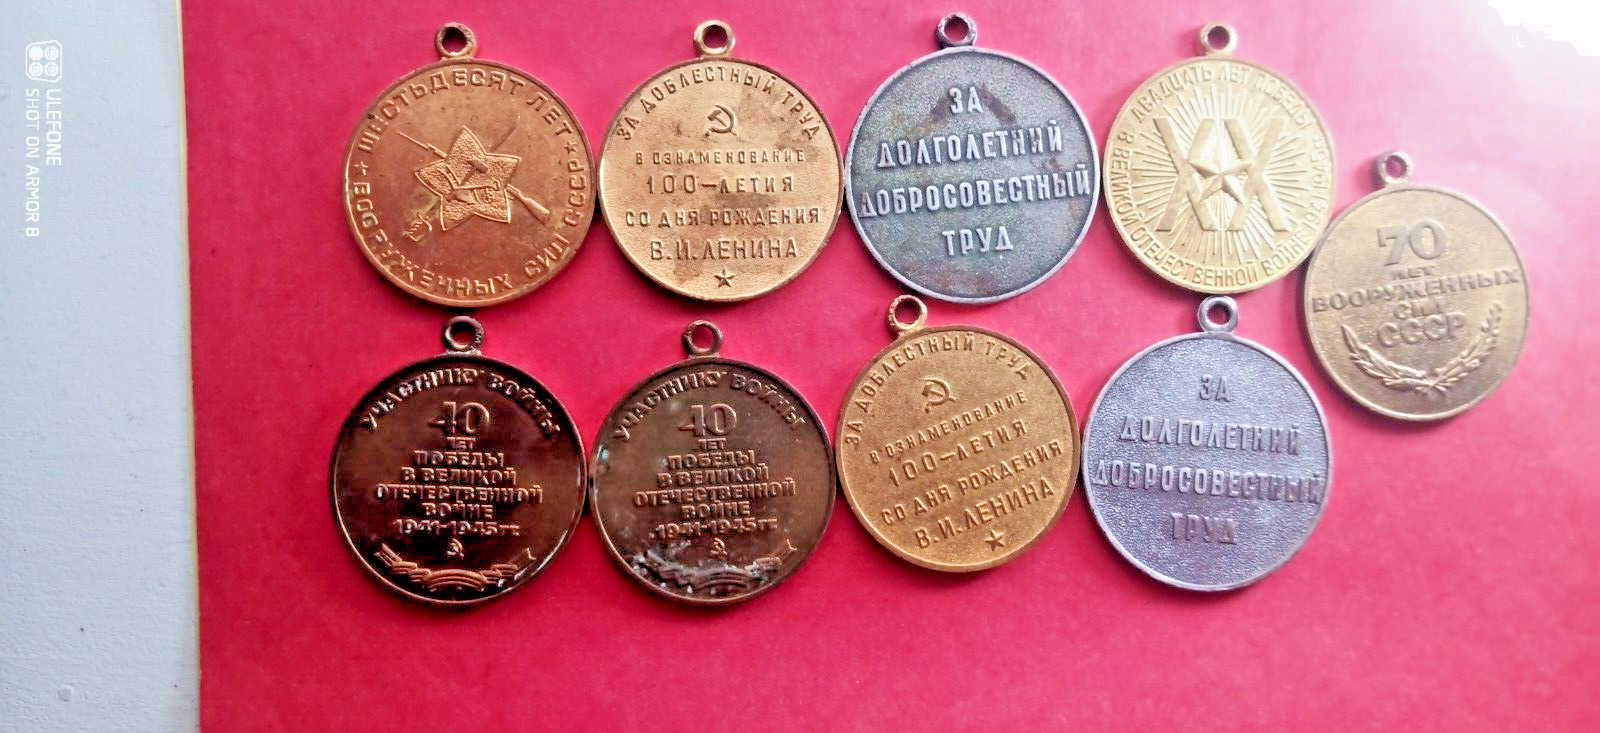 Jubilee medals